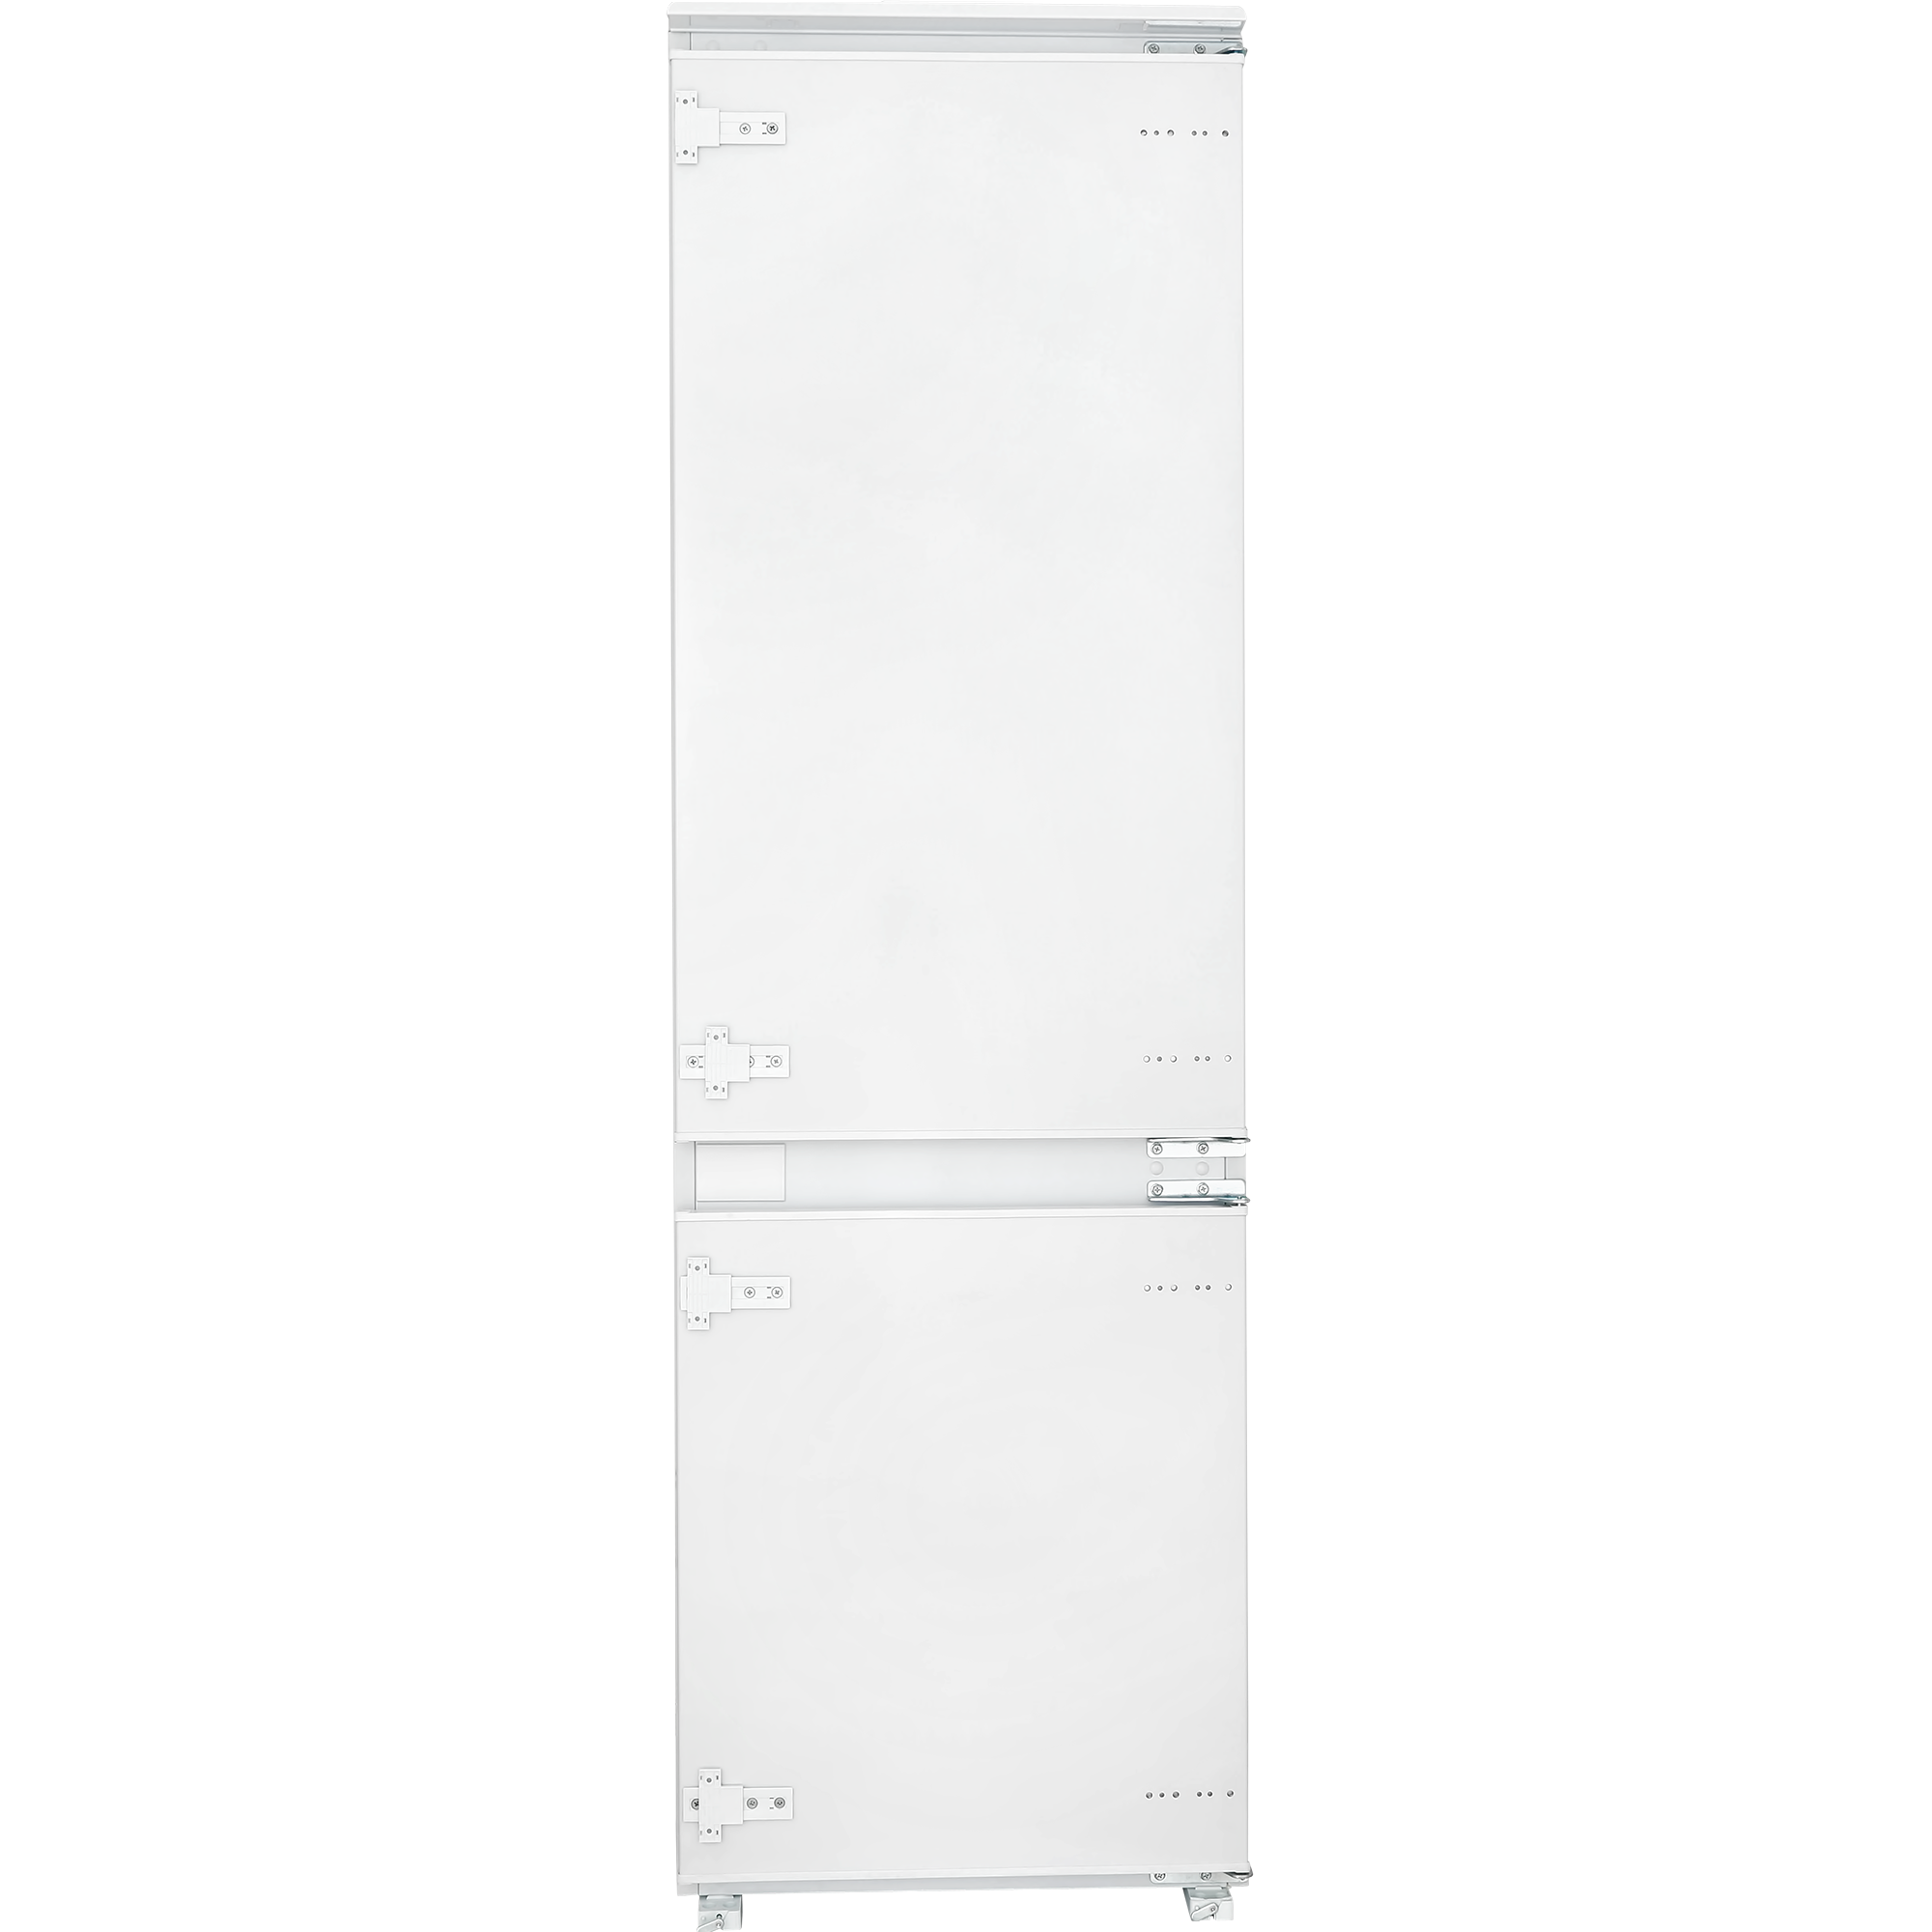 Dexp fresh bib420ama. Встраиваемый холодильник HIBERG rfcb-350 NFW. Холодильник DEXP bib420ama. Хиберг RF 400 NFW. Параметры холодильника DEXP Fresh Bib 420 ama.